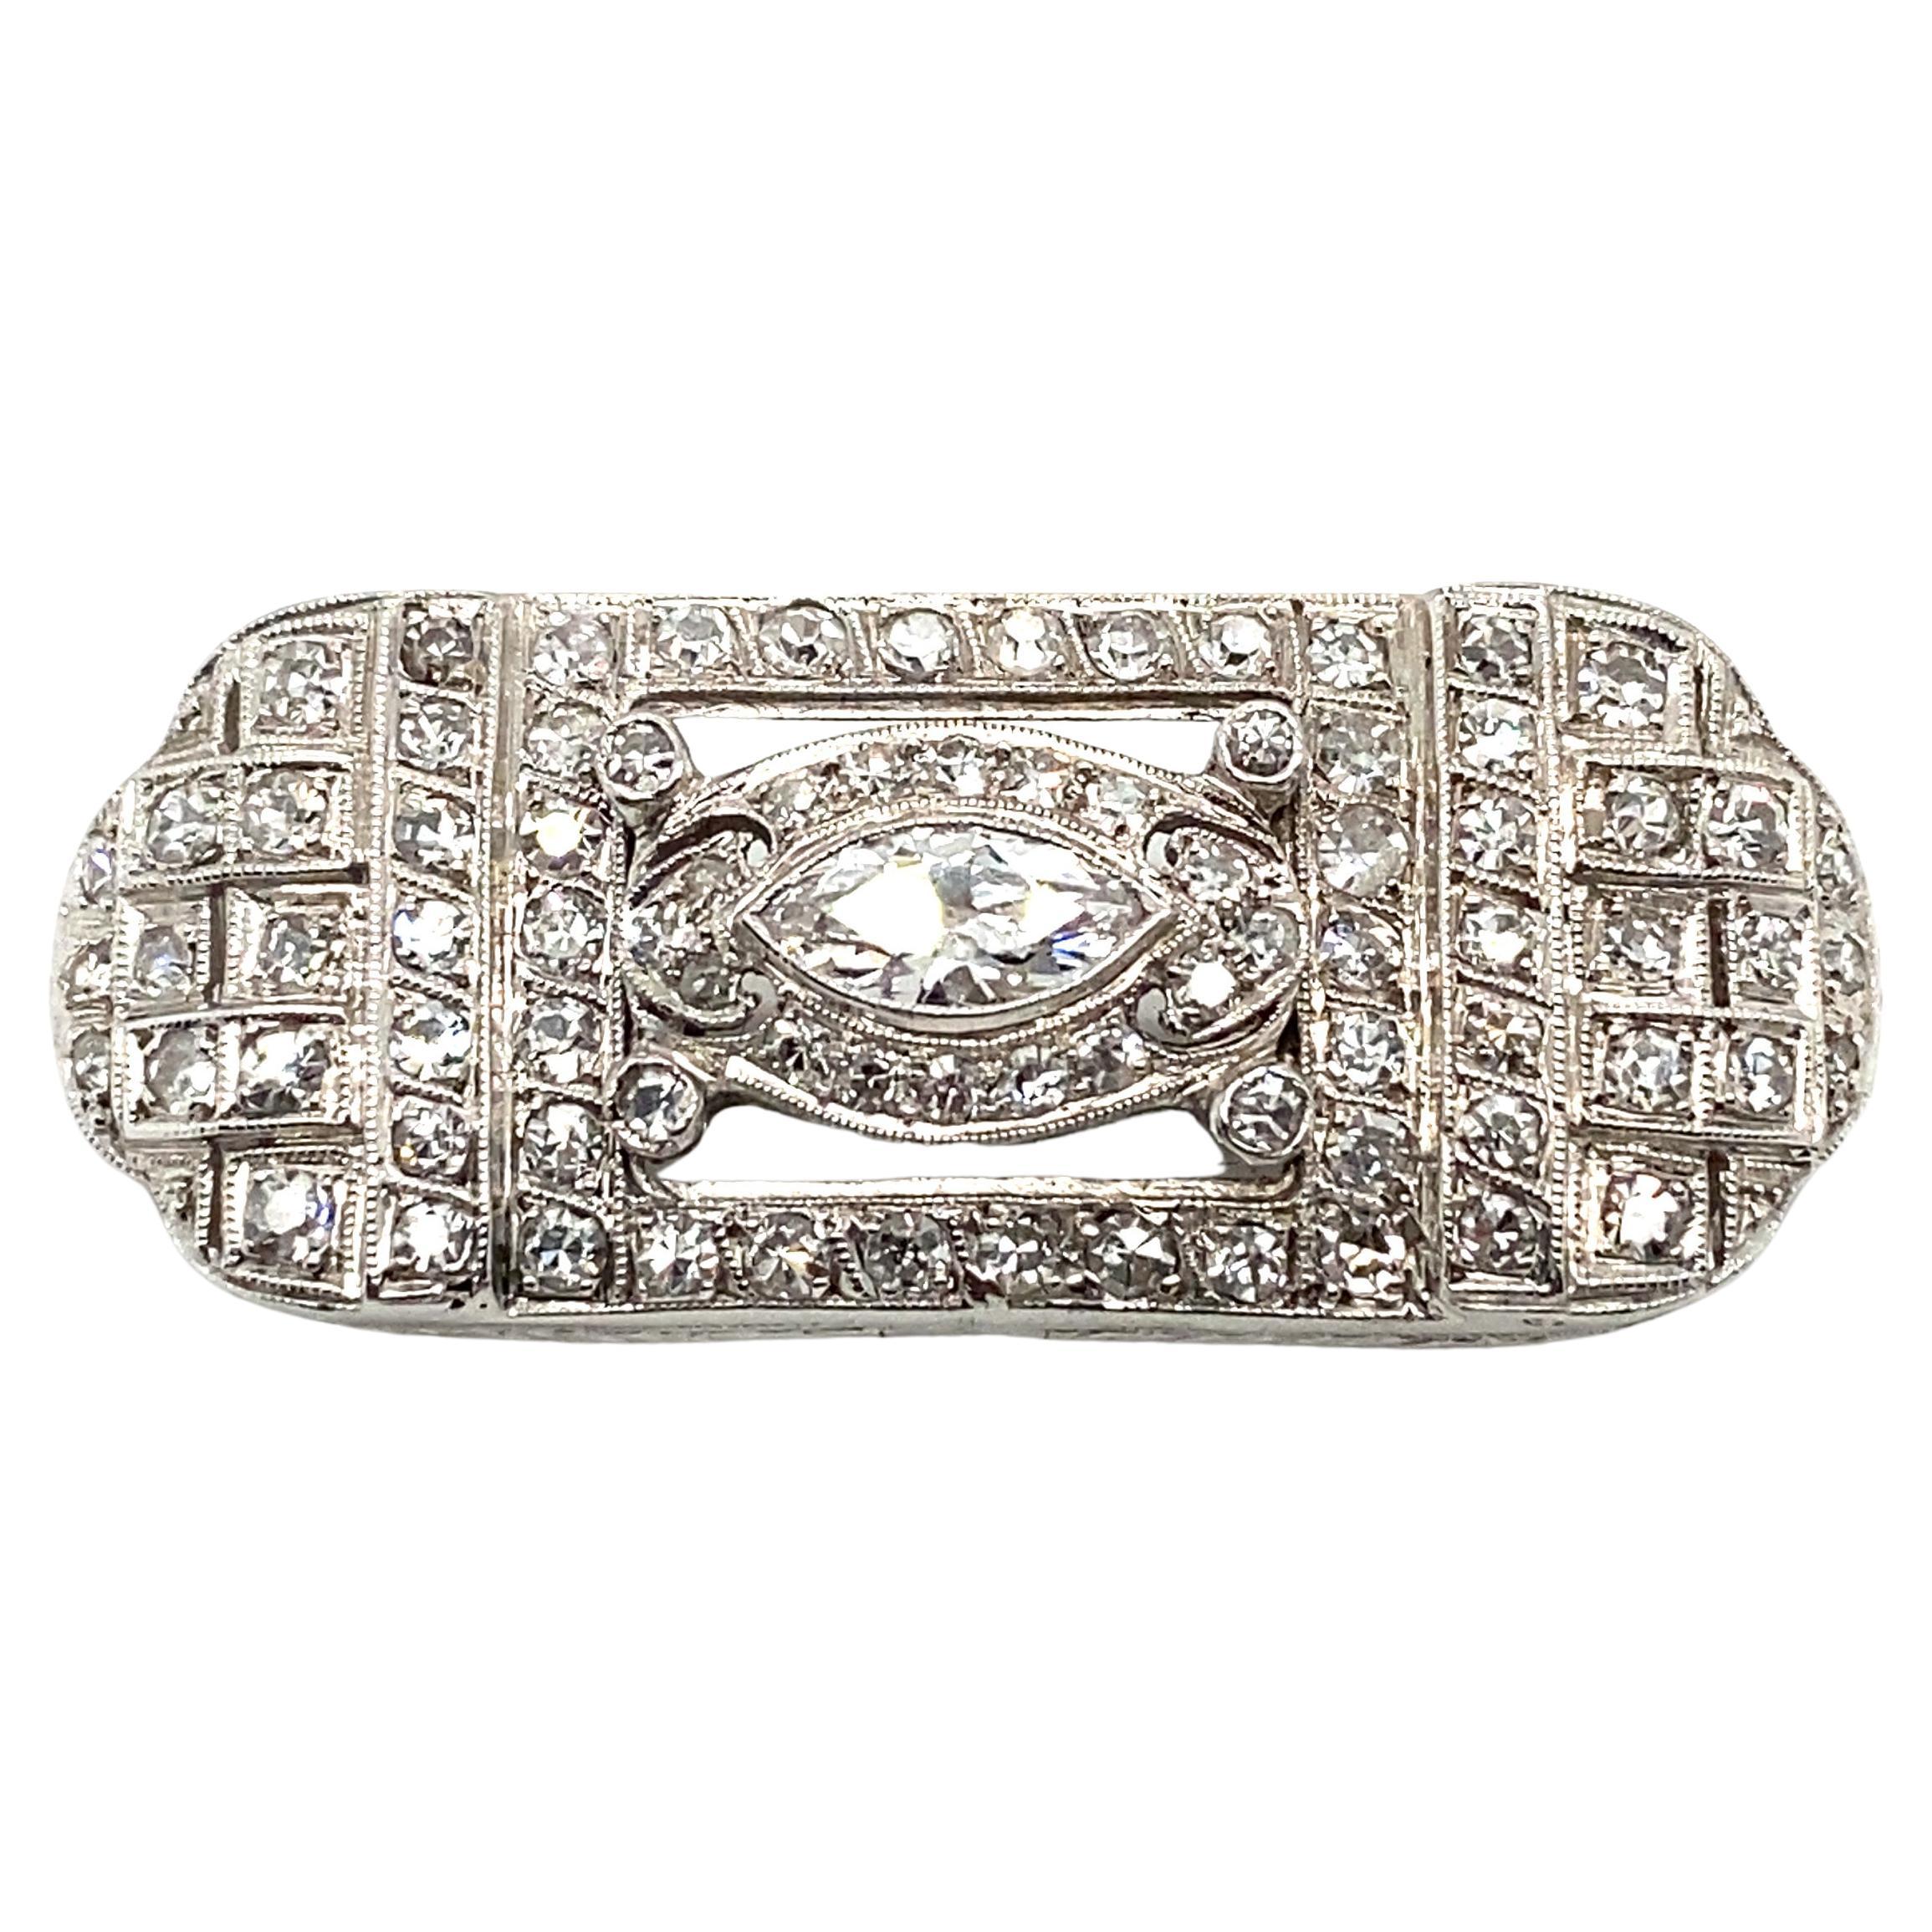 1920s Art Deco 2 Carat Total Diamond Brooch in Platinum For Sale